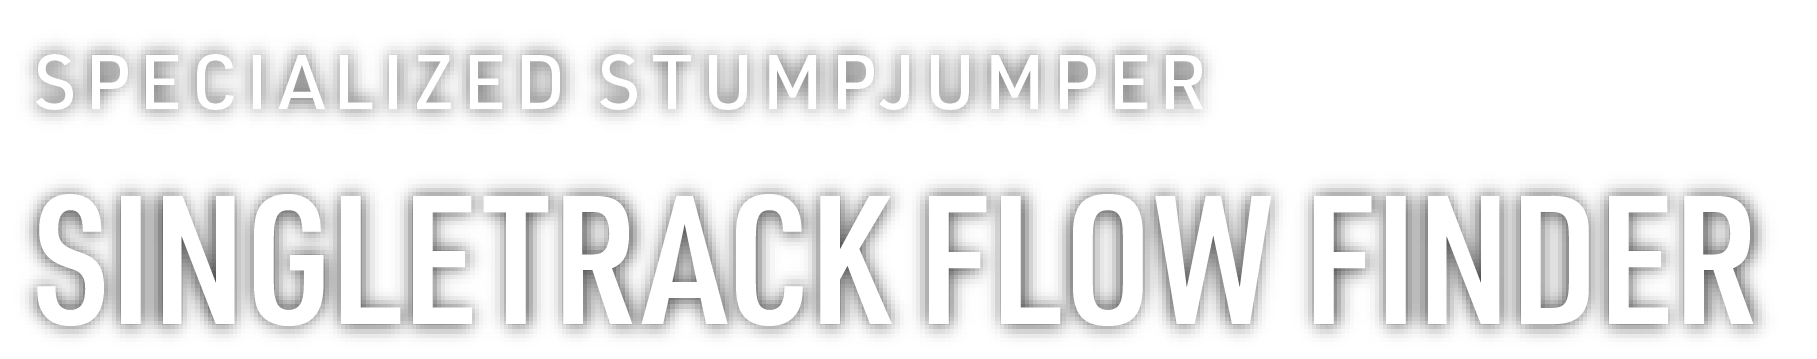 Specialized Stumpjumper | Singletrack Flow Finder